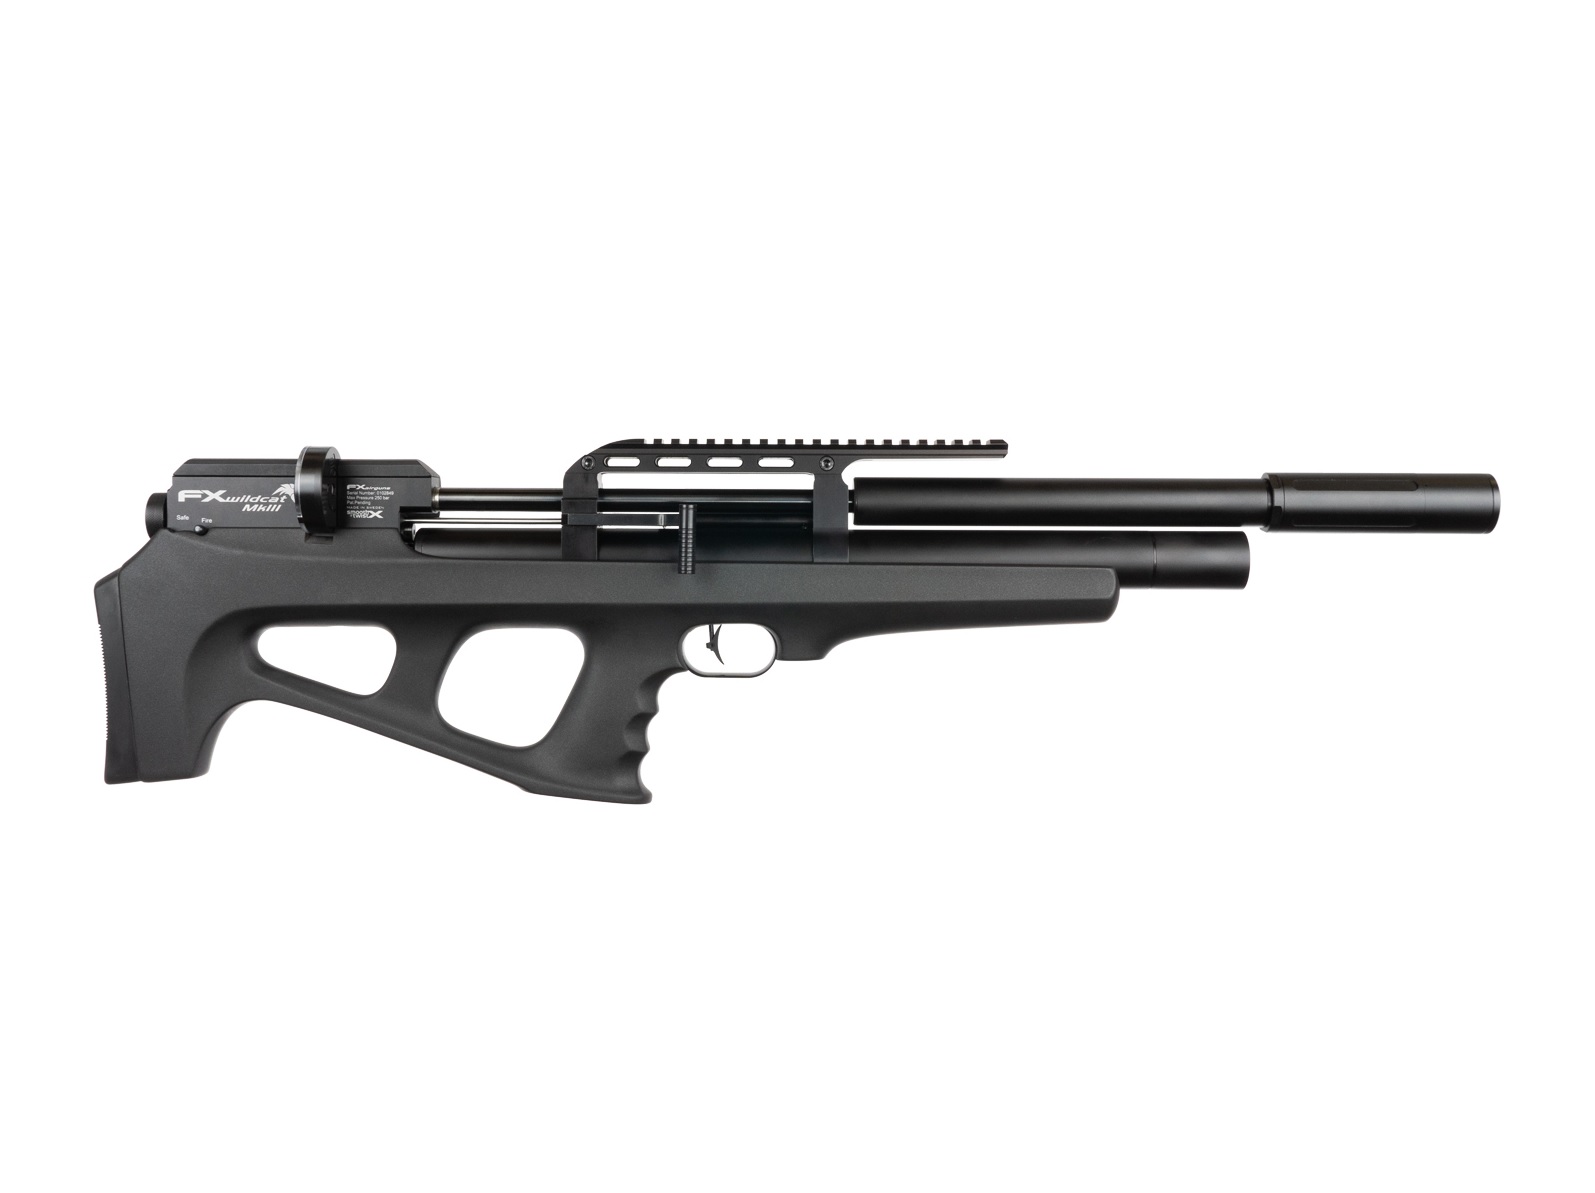 3335 model pistol - airsoft gun version - shop Gunfire